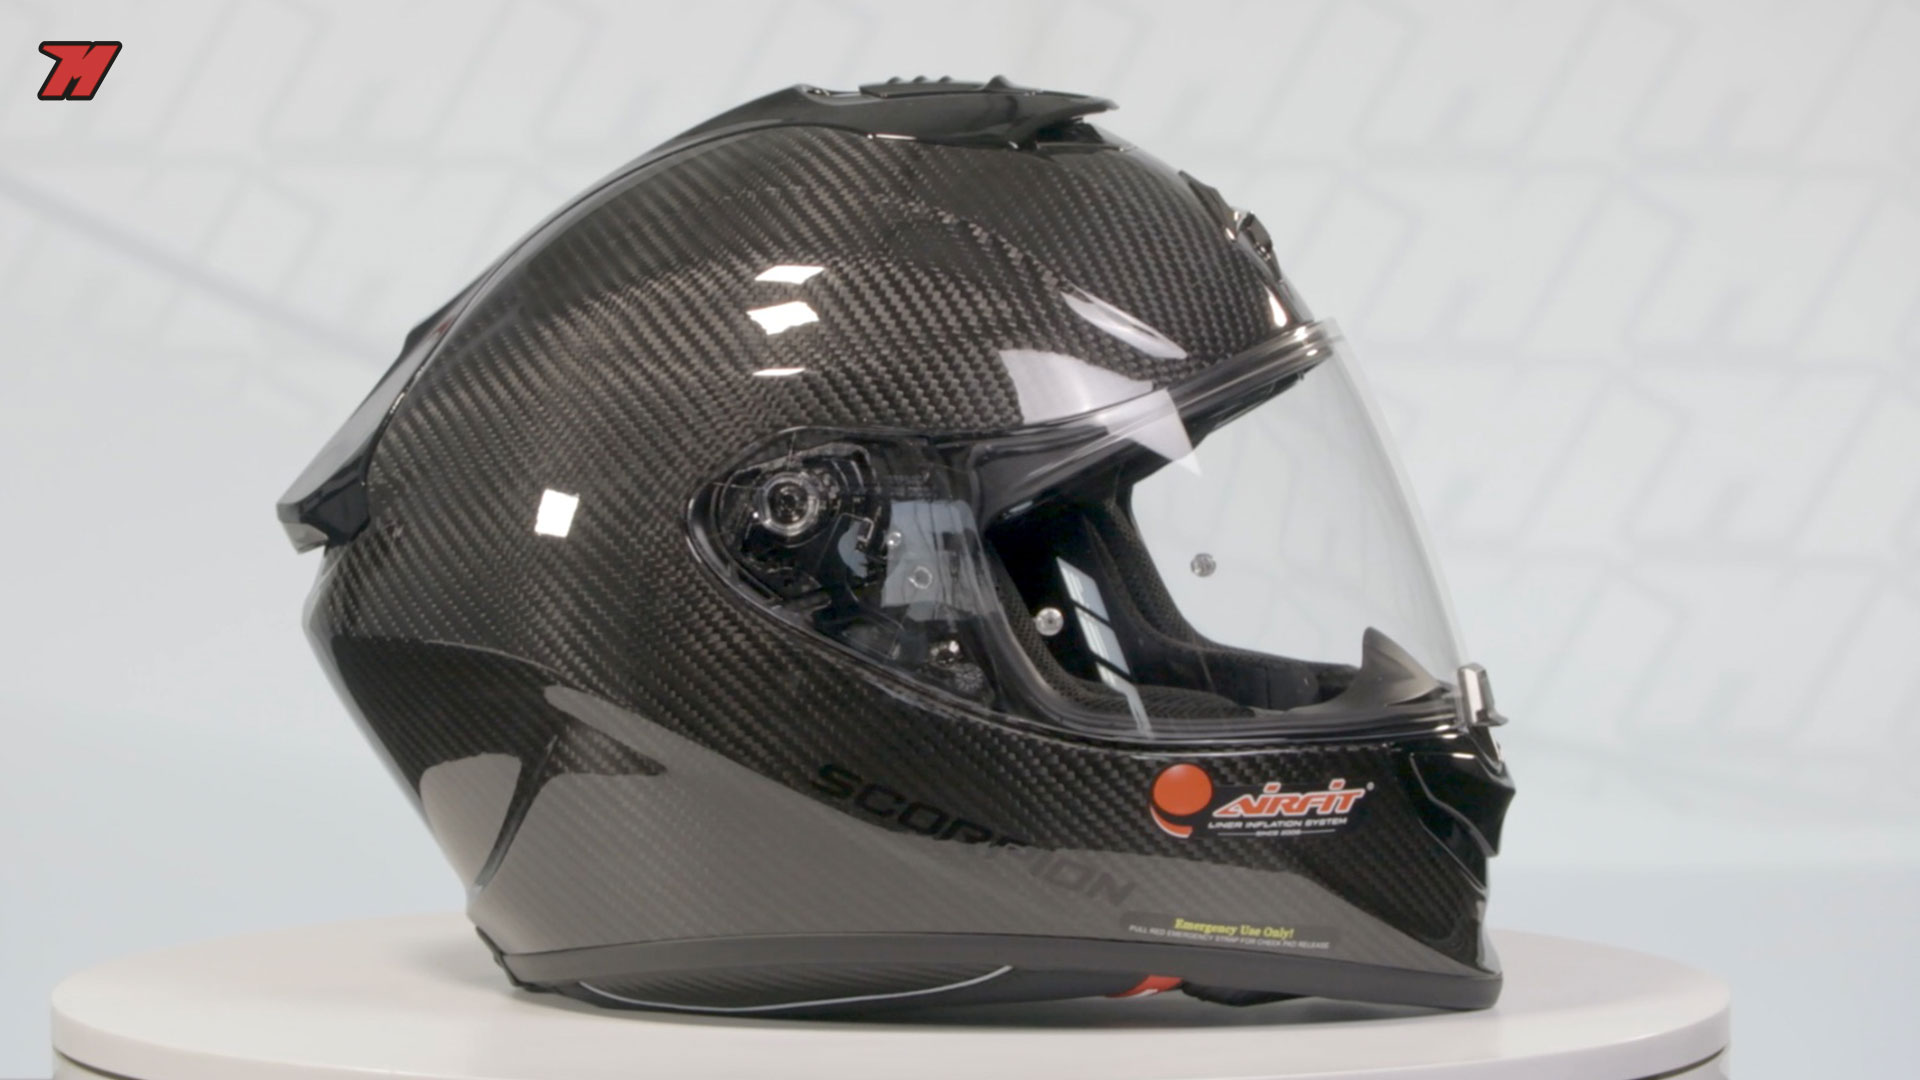 Smallest, Lightest and Most Aerodynamic Helmets